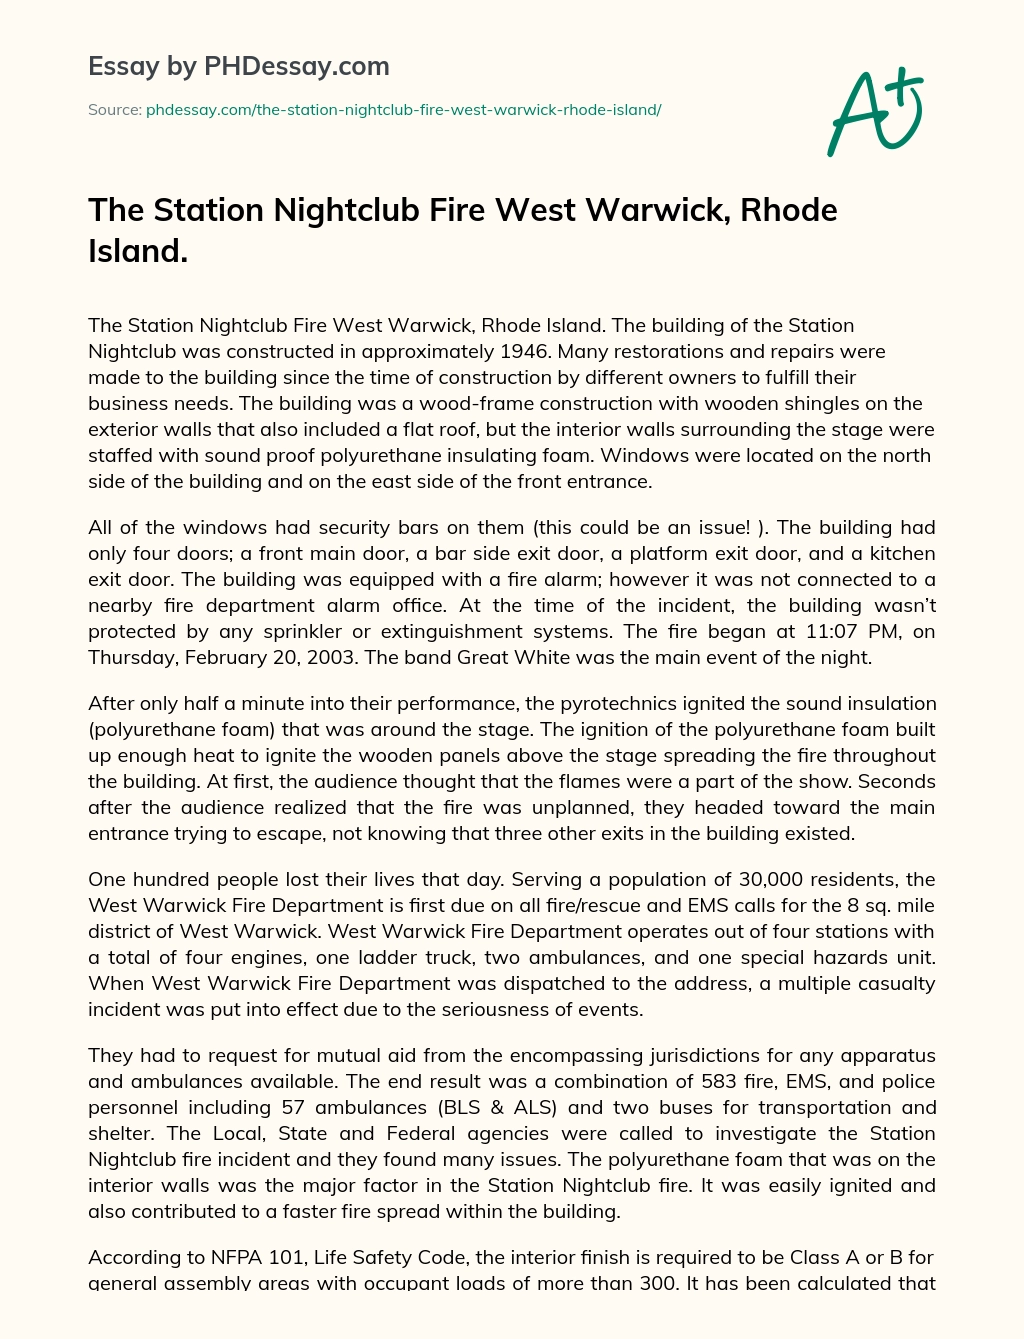 The Station Nightclub Fire West Warwick, Rhode Island. essay